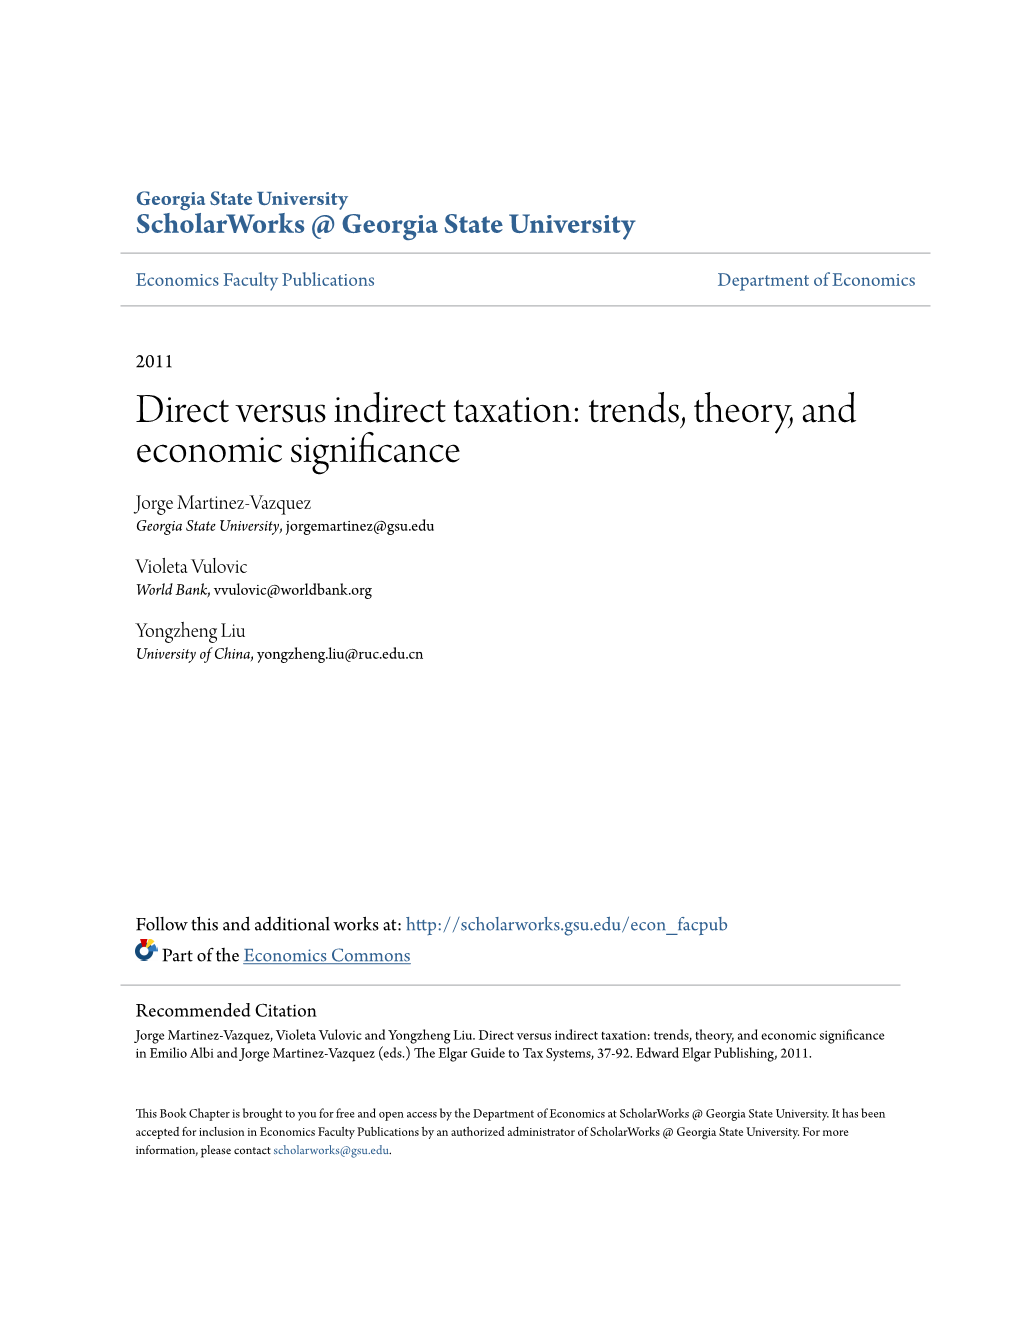 Direct Versus Indirect Taxation: Trends, Theory, and Economic Significance Jorge Martinez-Vazquez Georgia State University, Jorgemartinez@Gsu.Edu